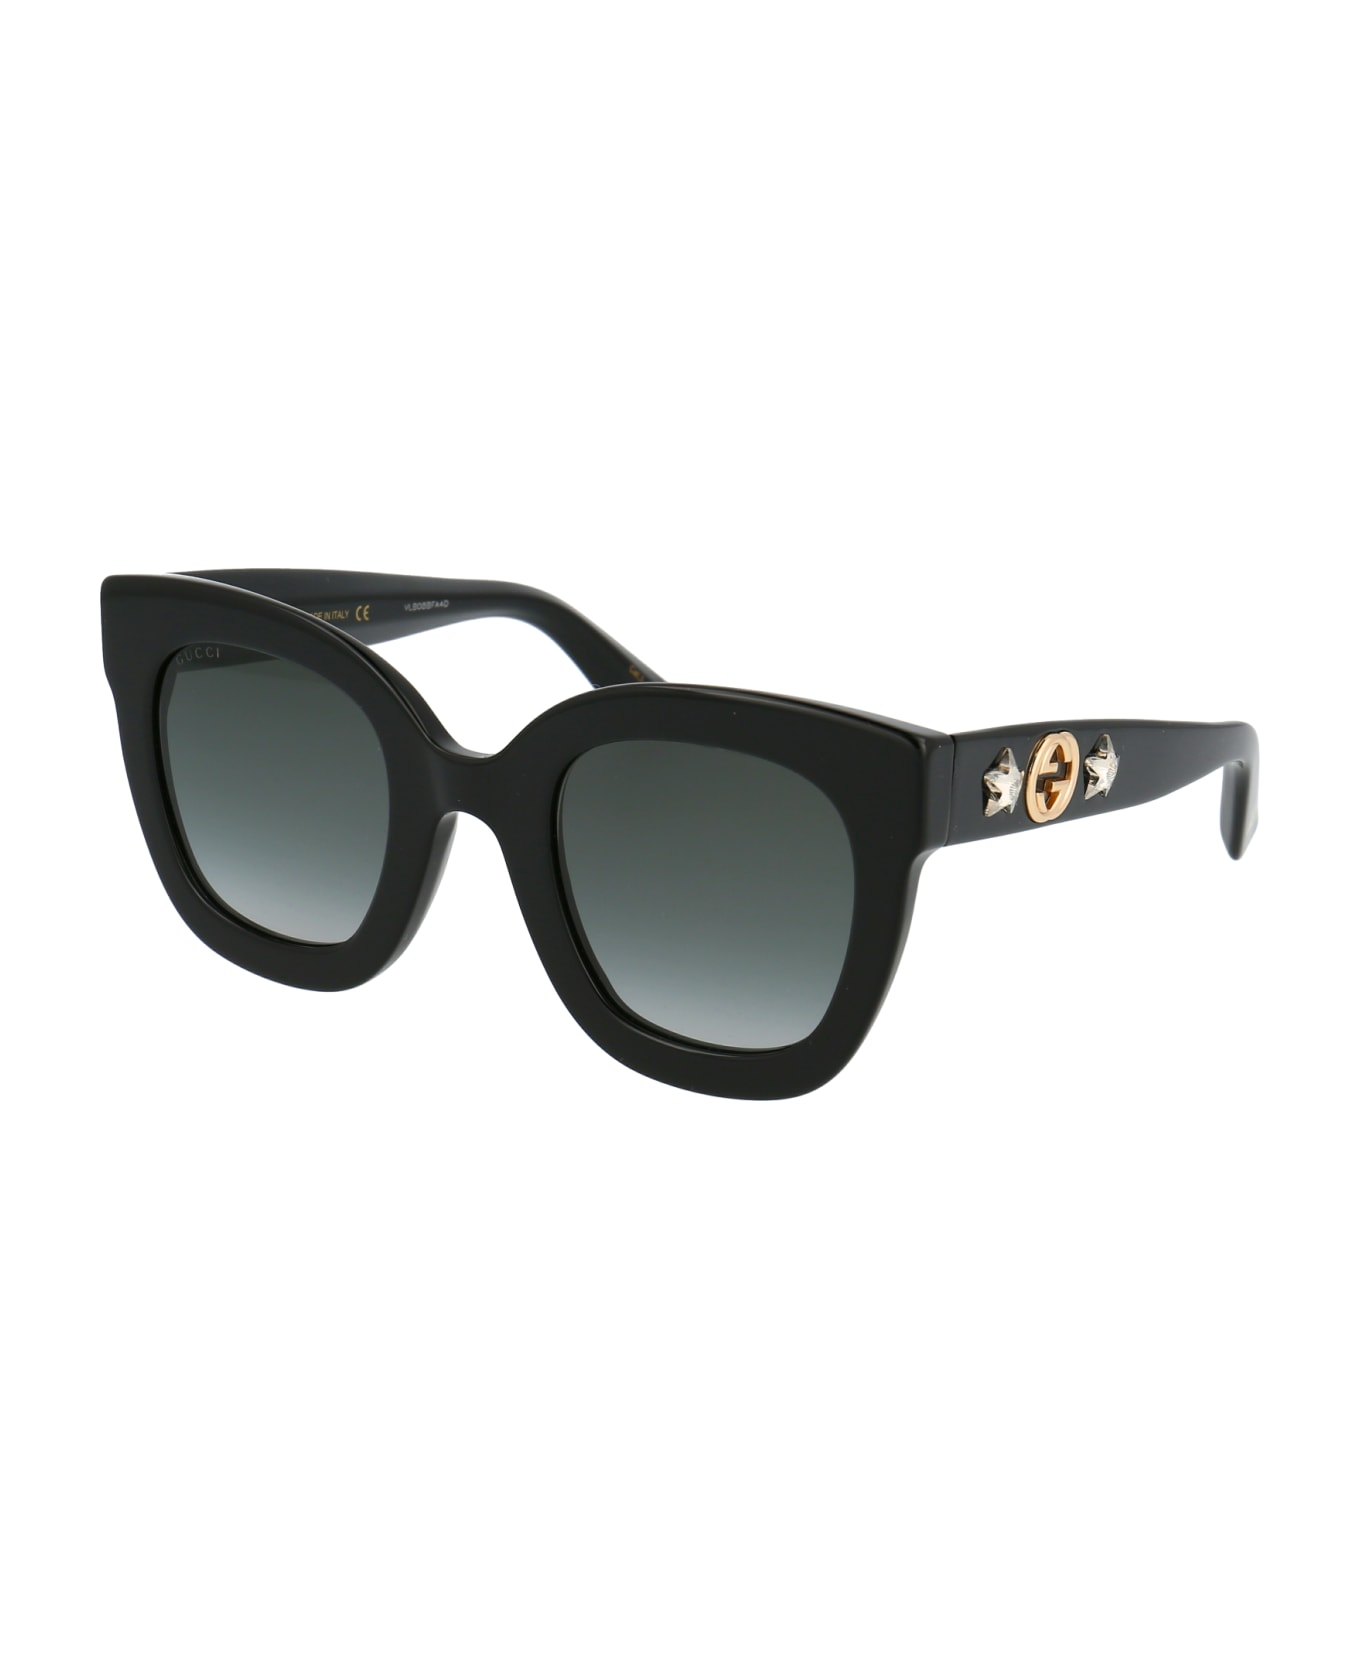 Gucci Eyewear Gg0208s Sunglasses - 001 BLACK BLACK GREY